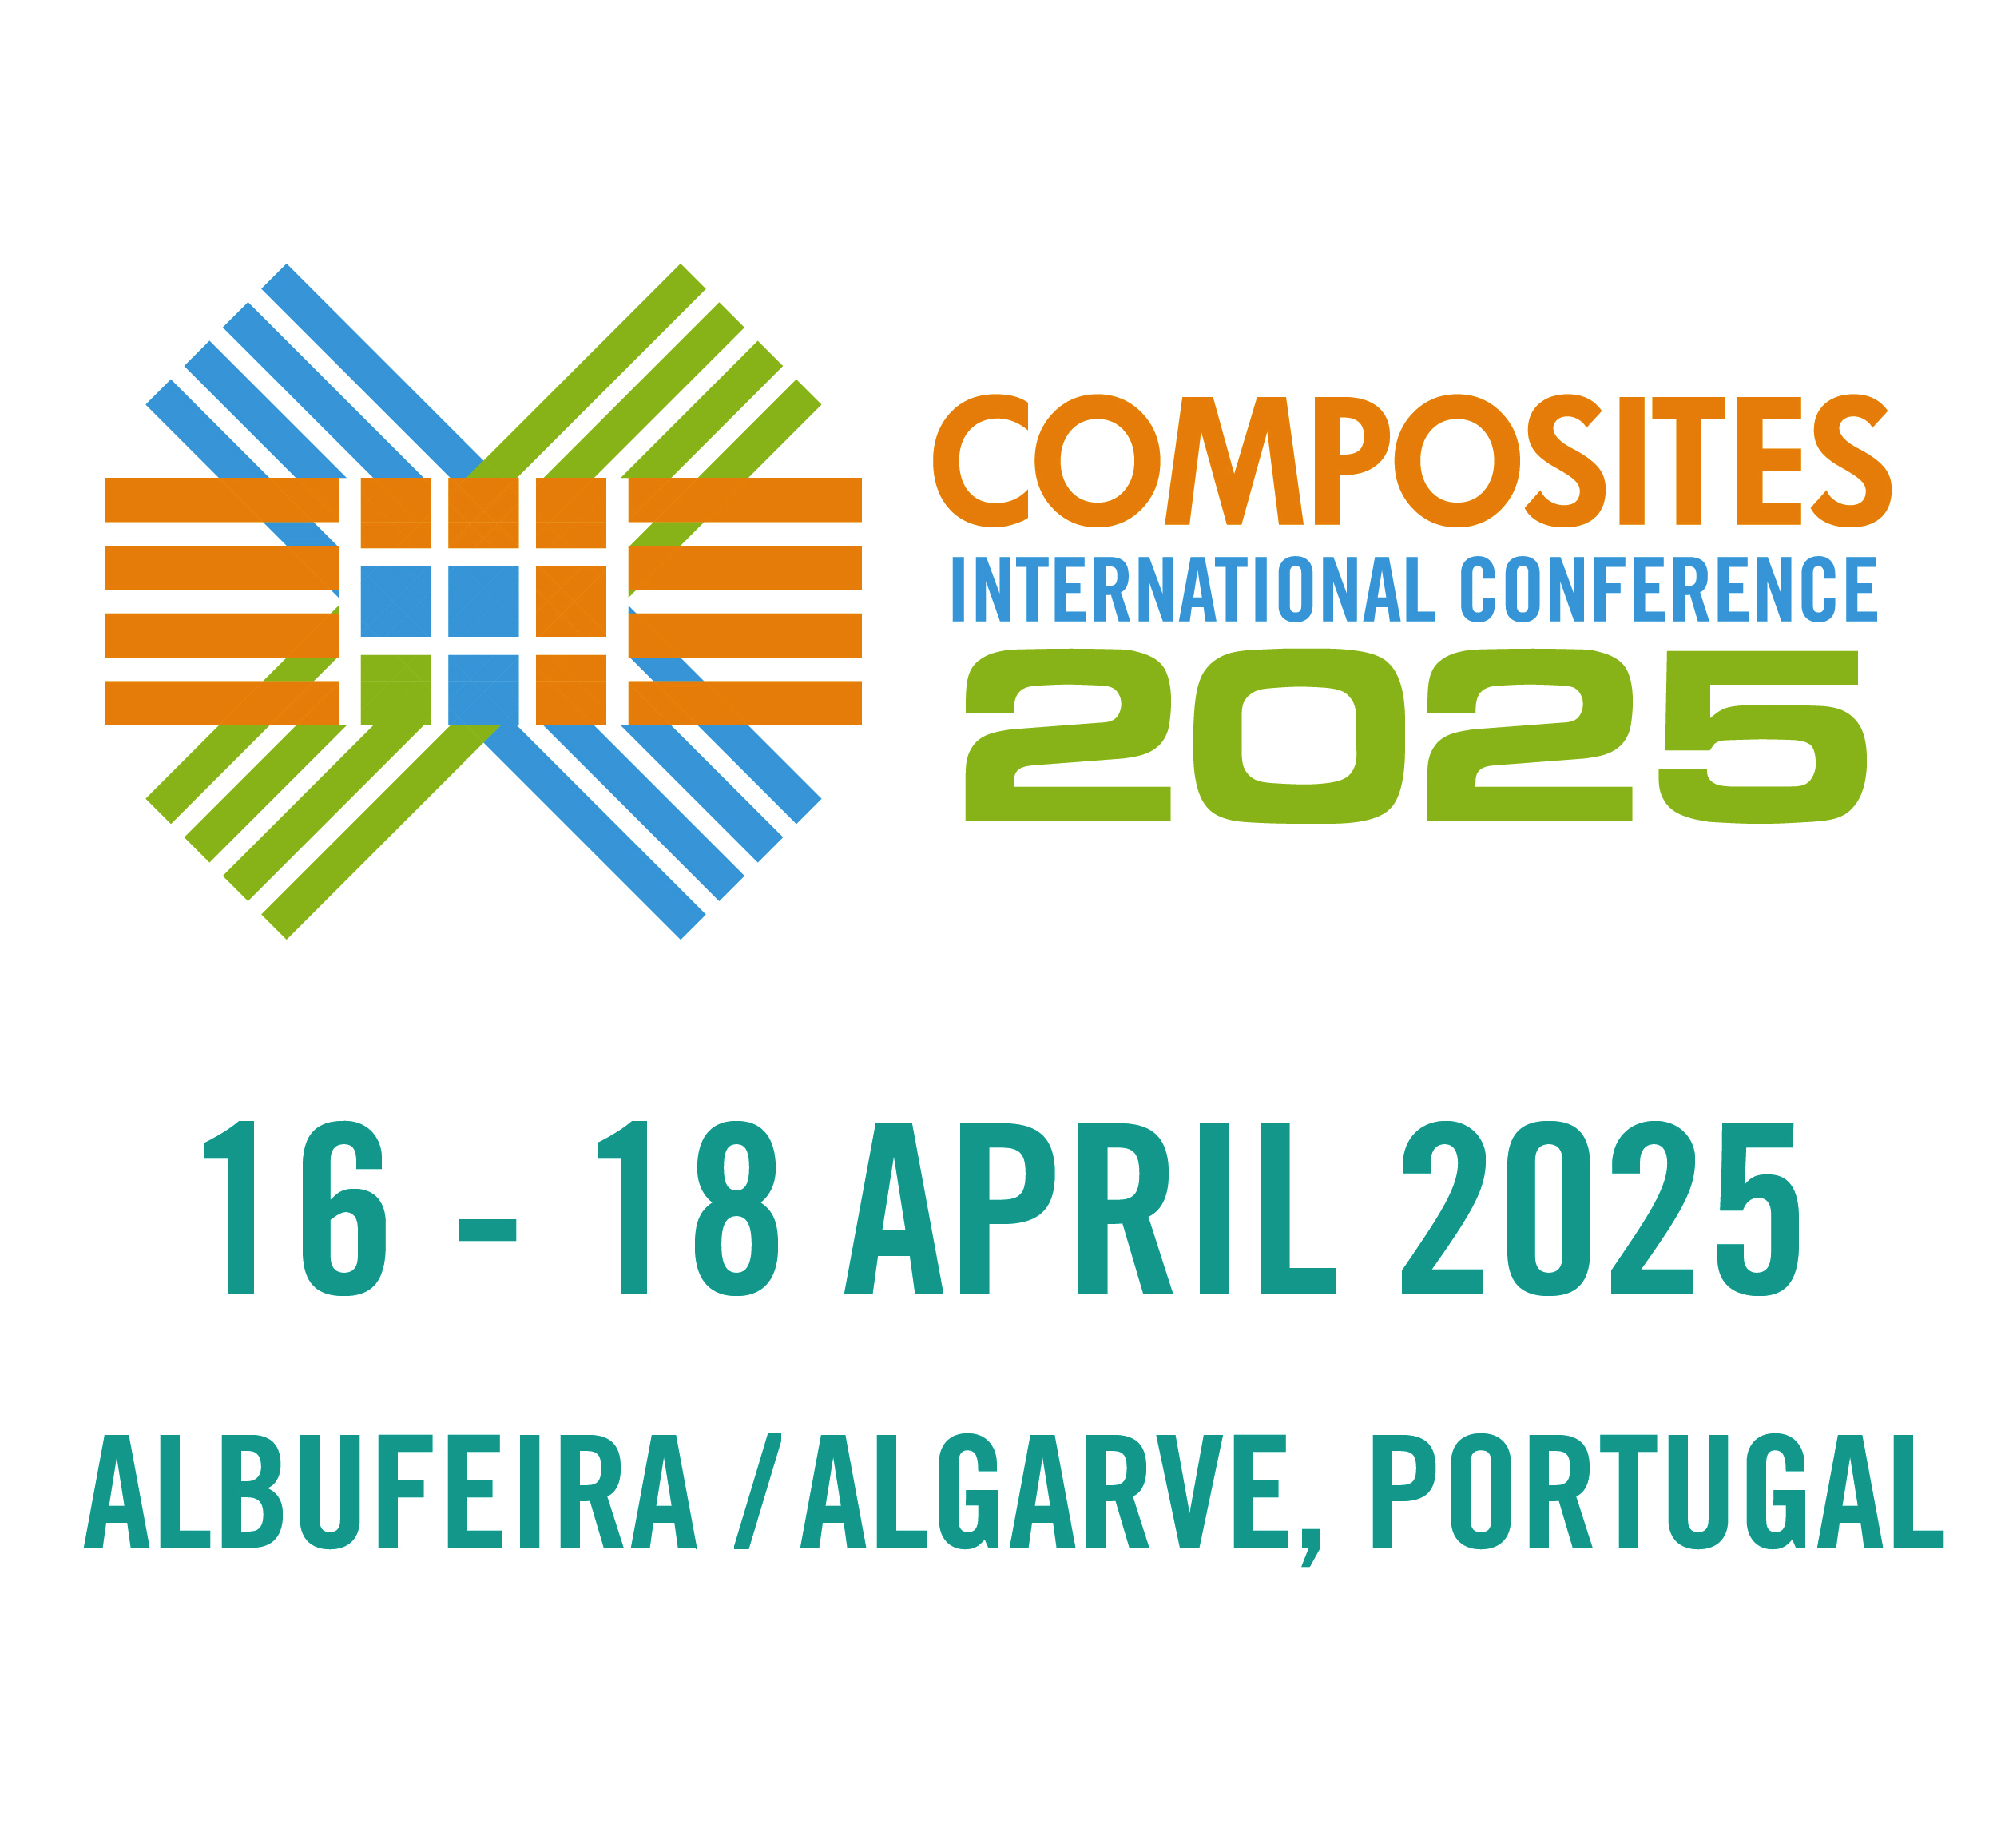 Composites International Conference - Composites 2025